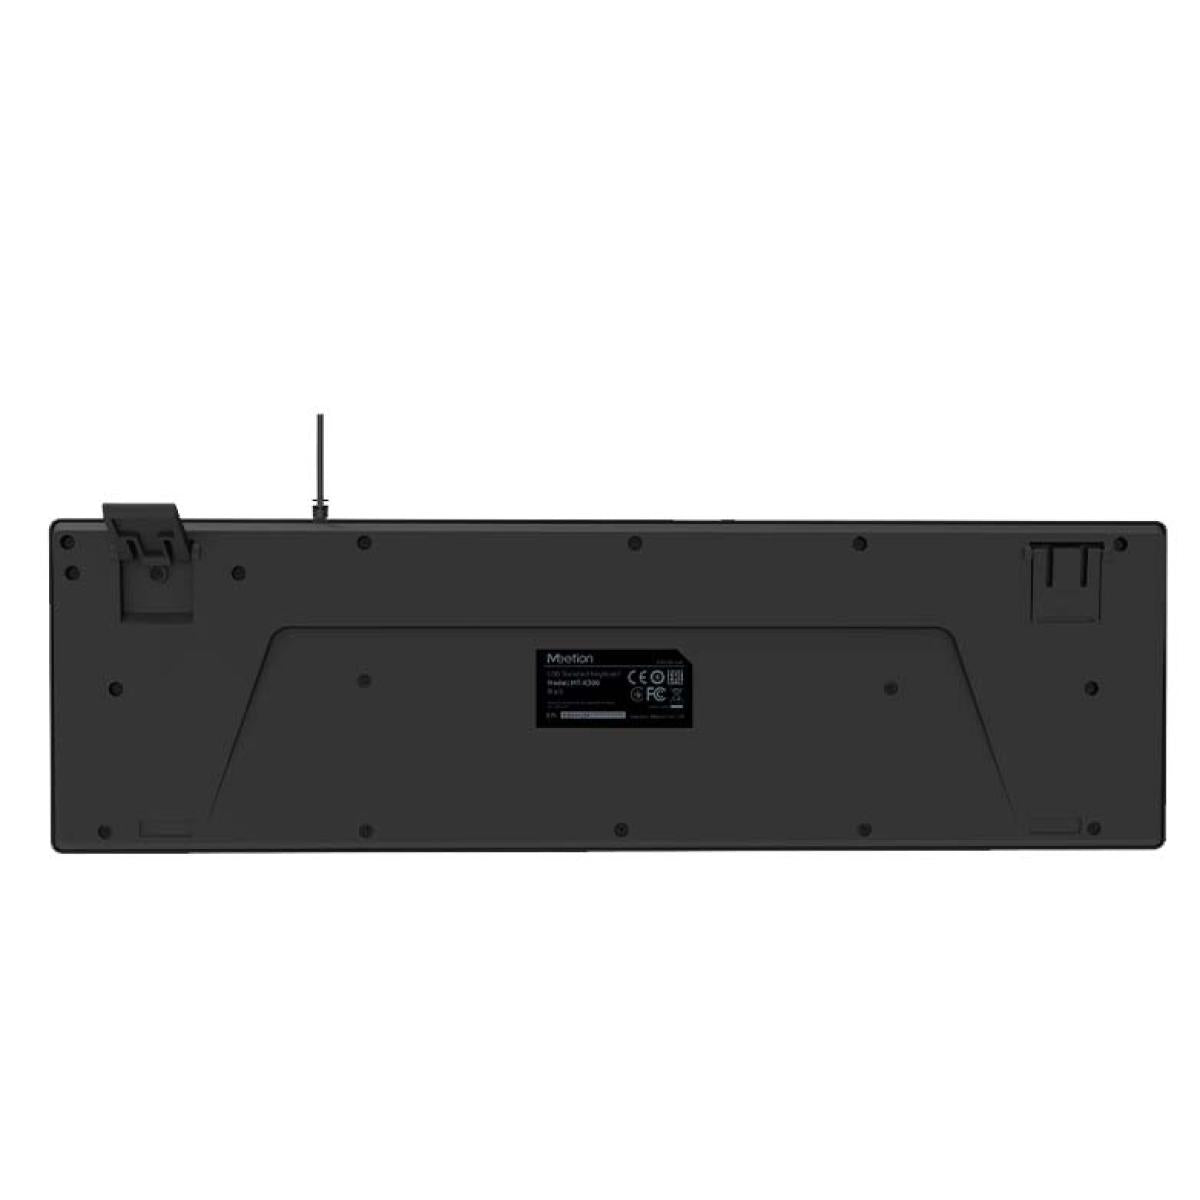 Meetion USB Standard Wired Keyboard - Black